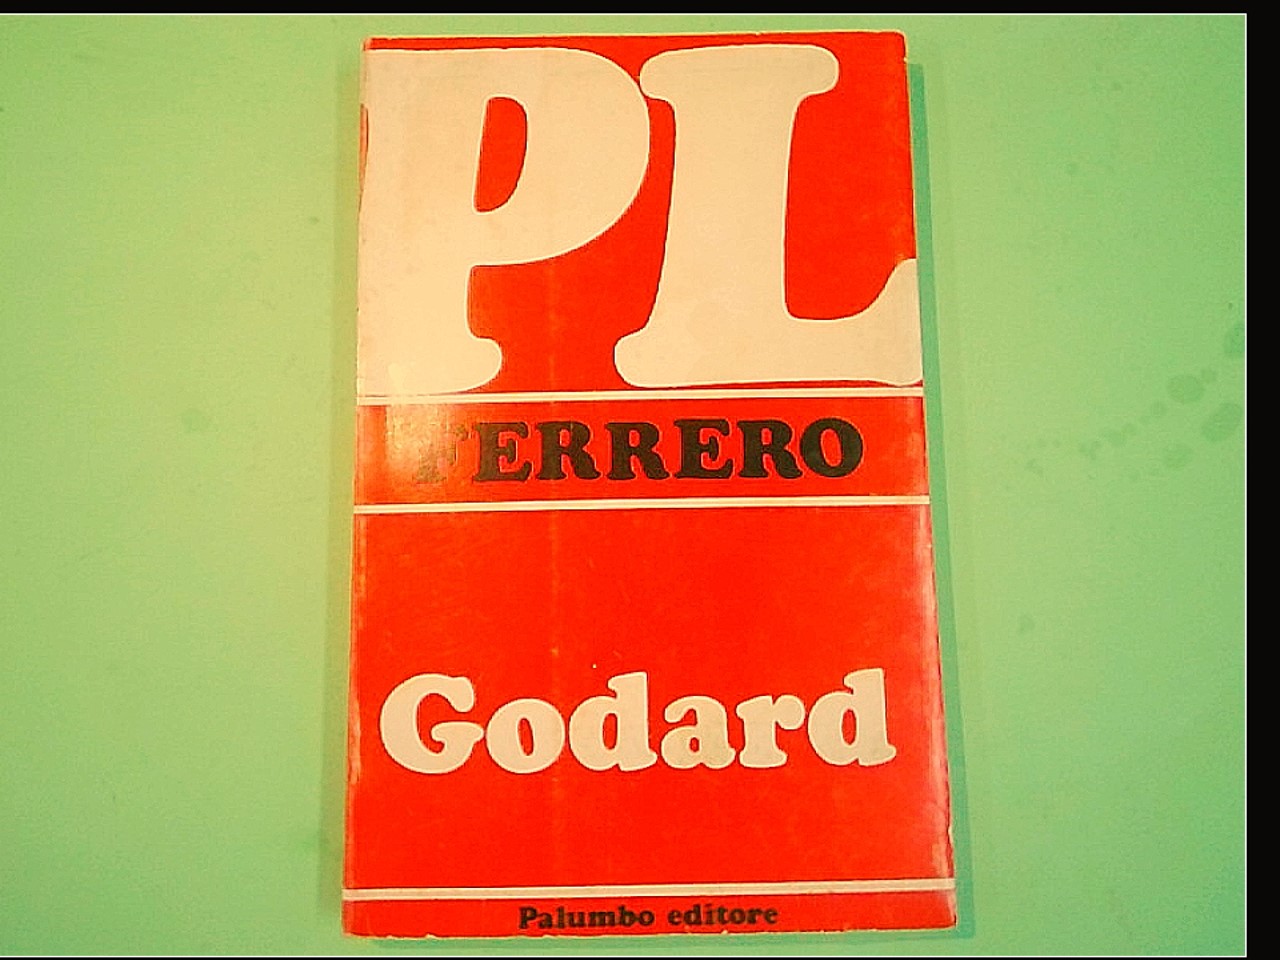 GODARD FERRERO PALUMBO EDITORE